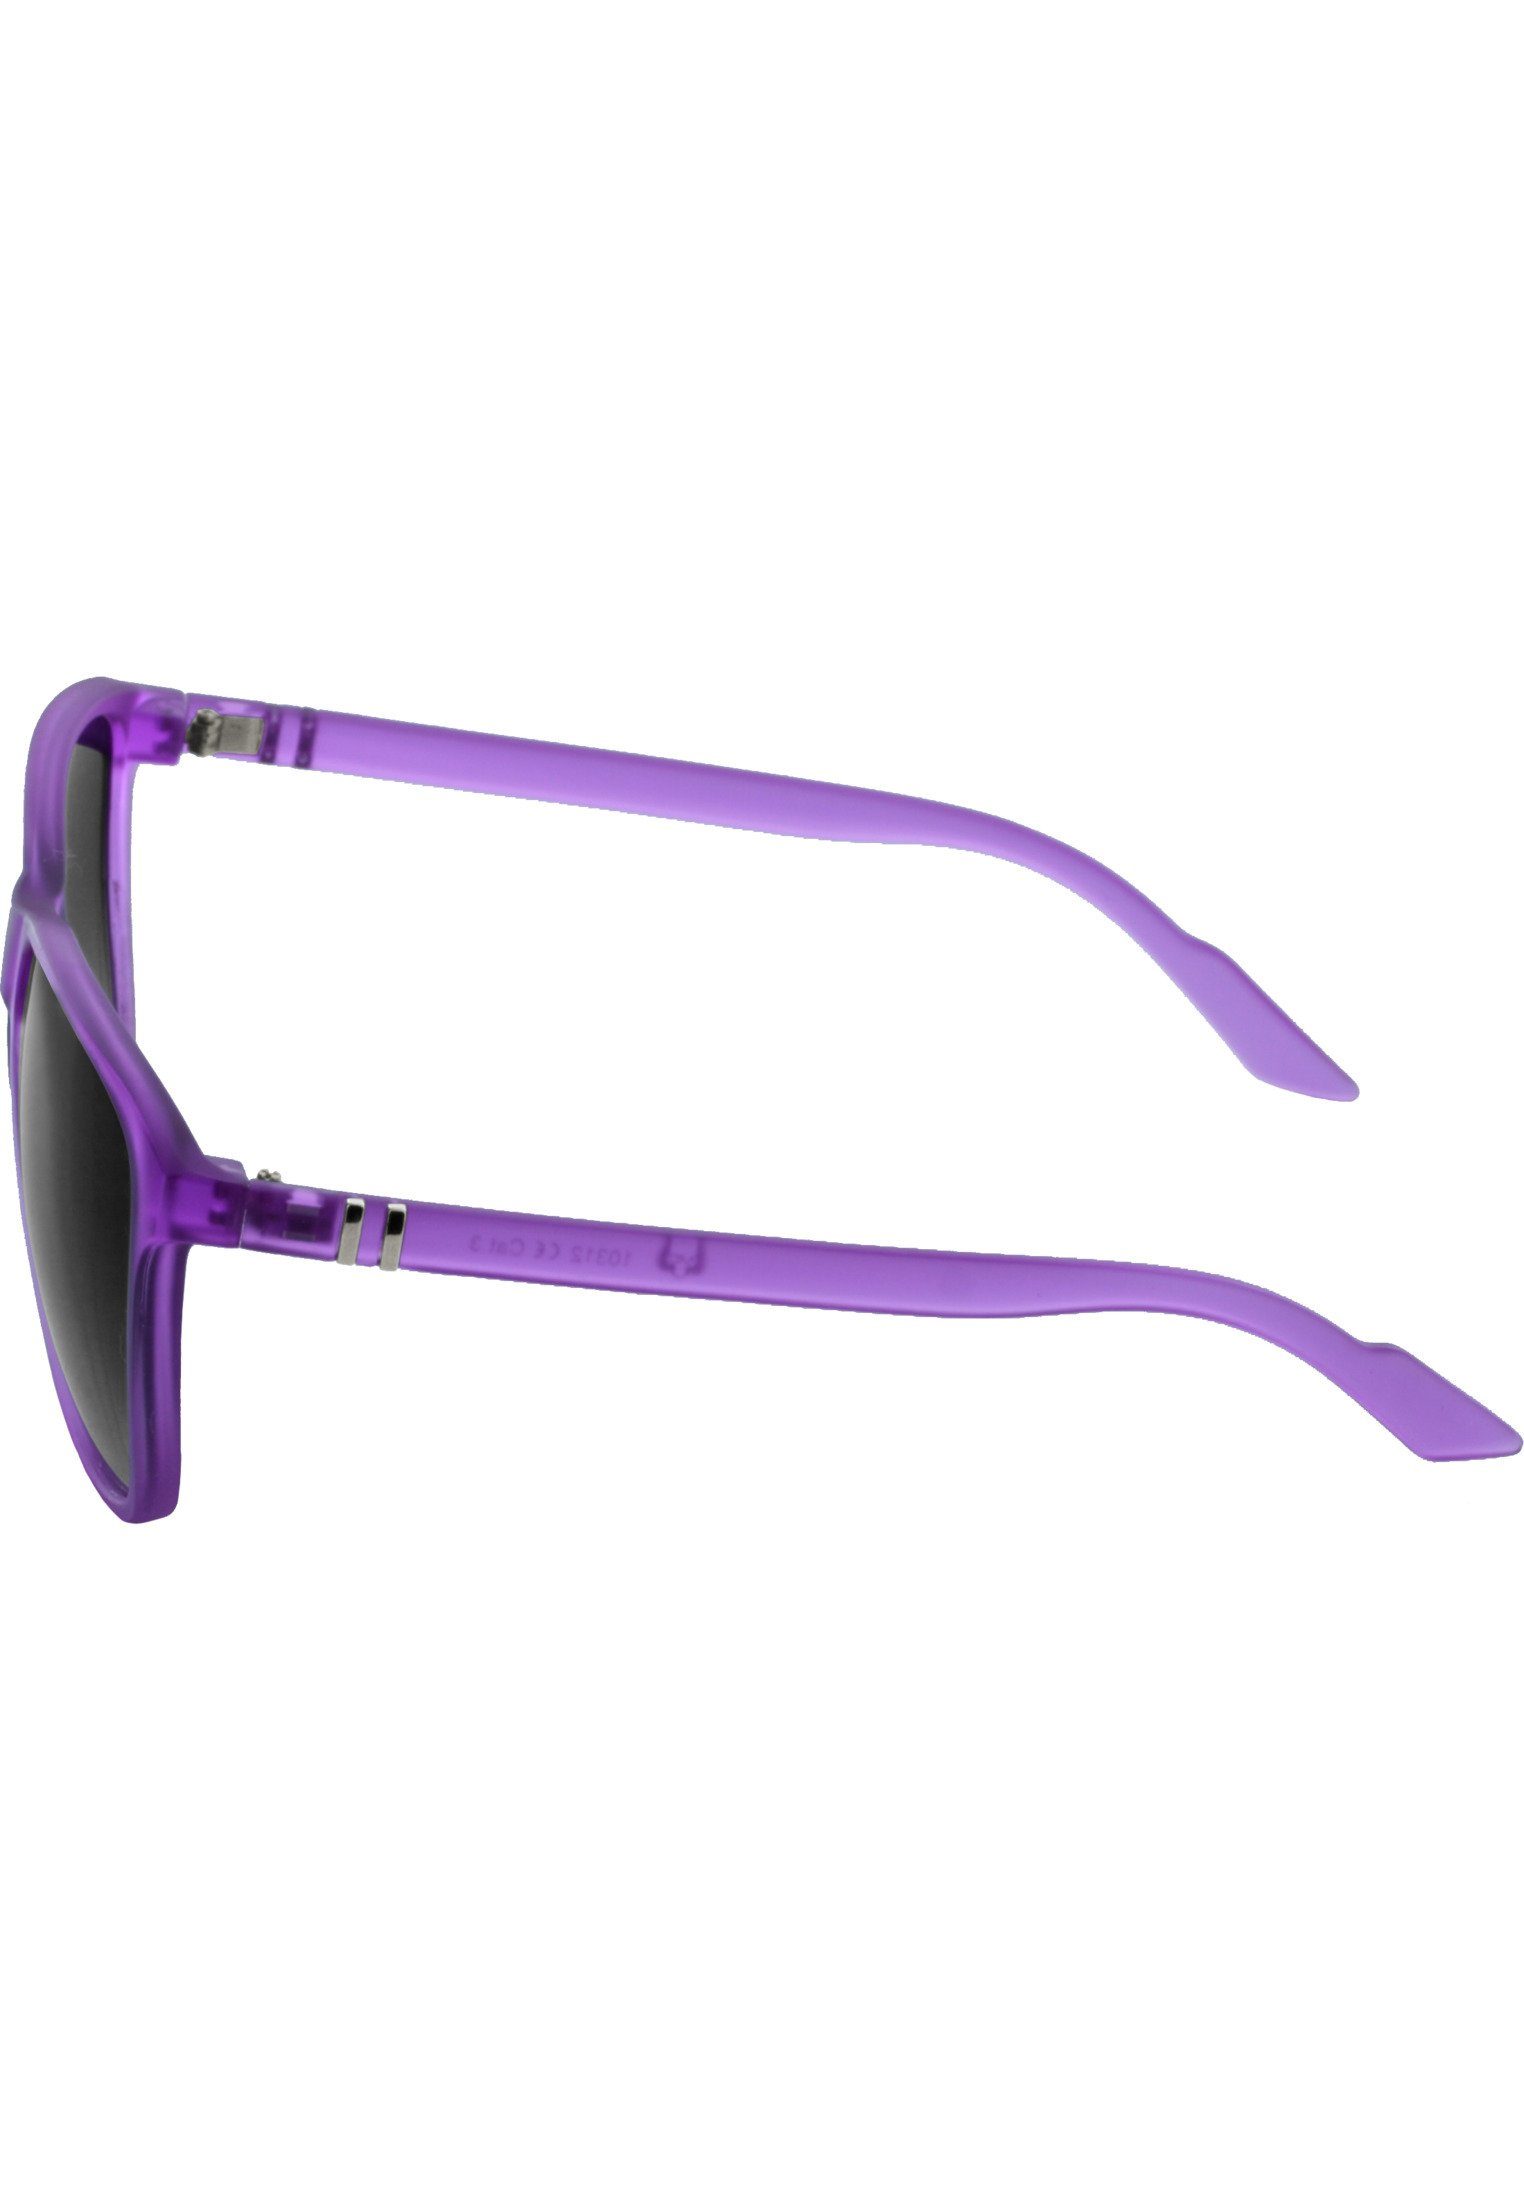 MSTRDS purple Chirwa Sonnenbrille Accessoires Sunglasses